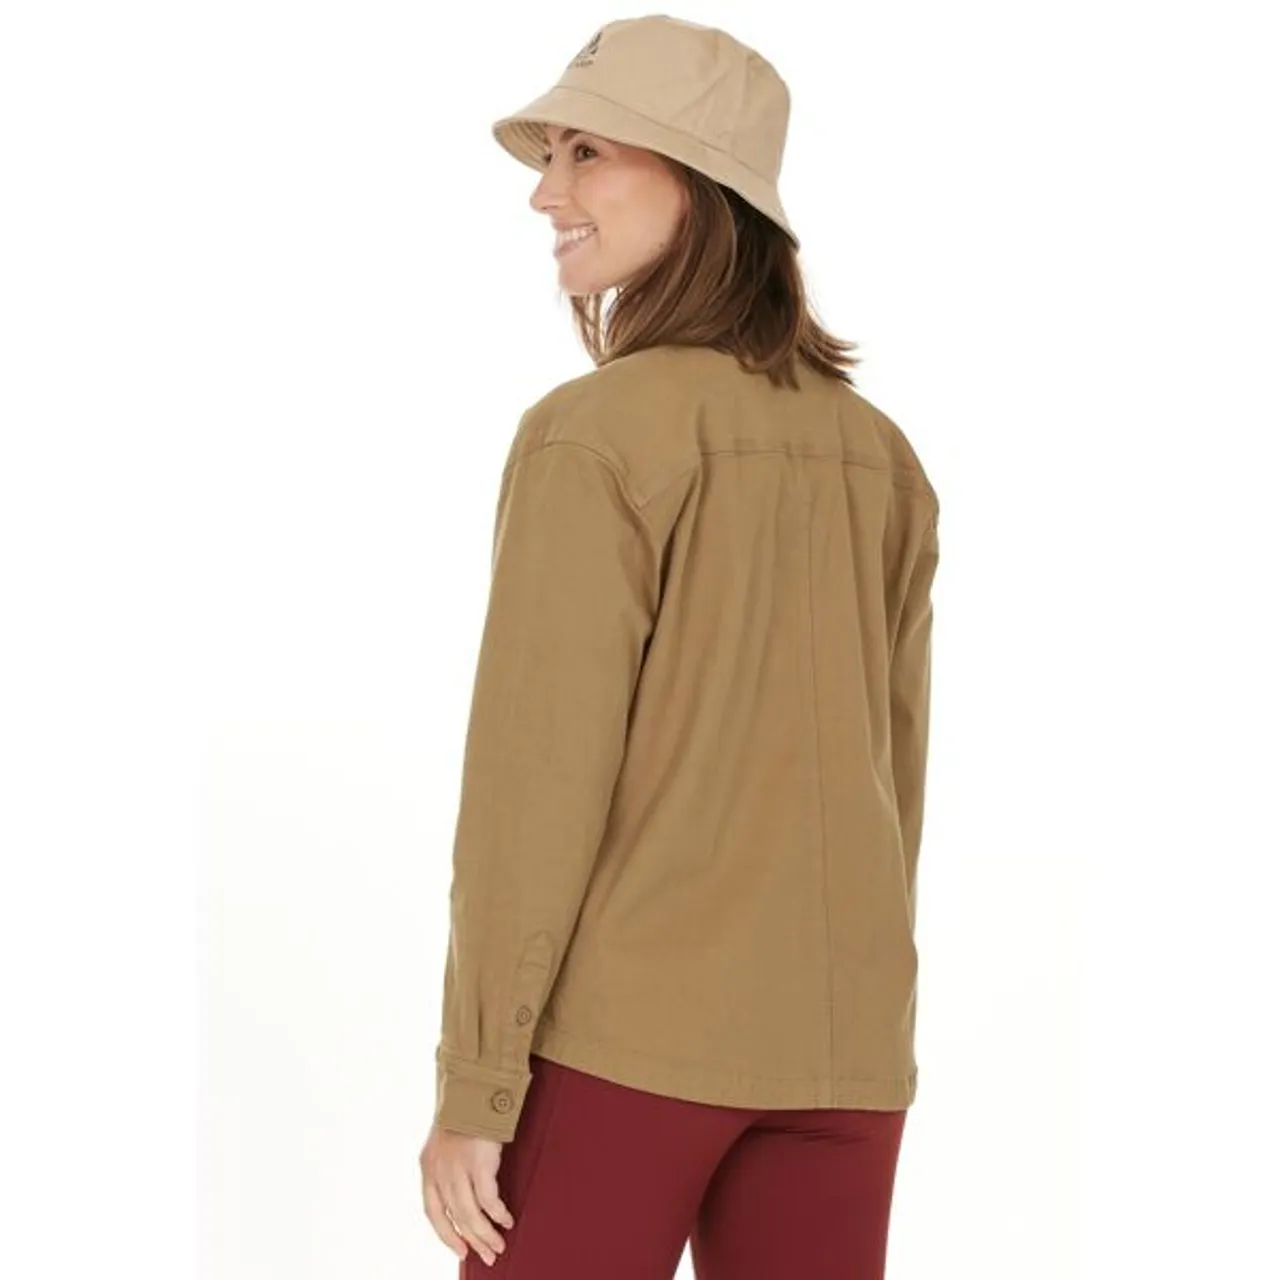 Fleeceshirt WHISTLER "Fallon" Gr. 42, braun (hellbraun) Damen Shirts Sweatshirts